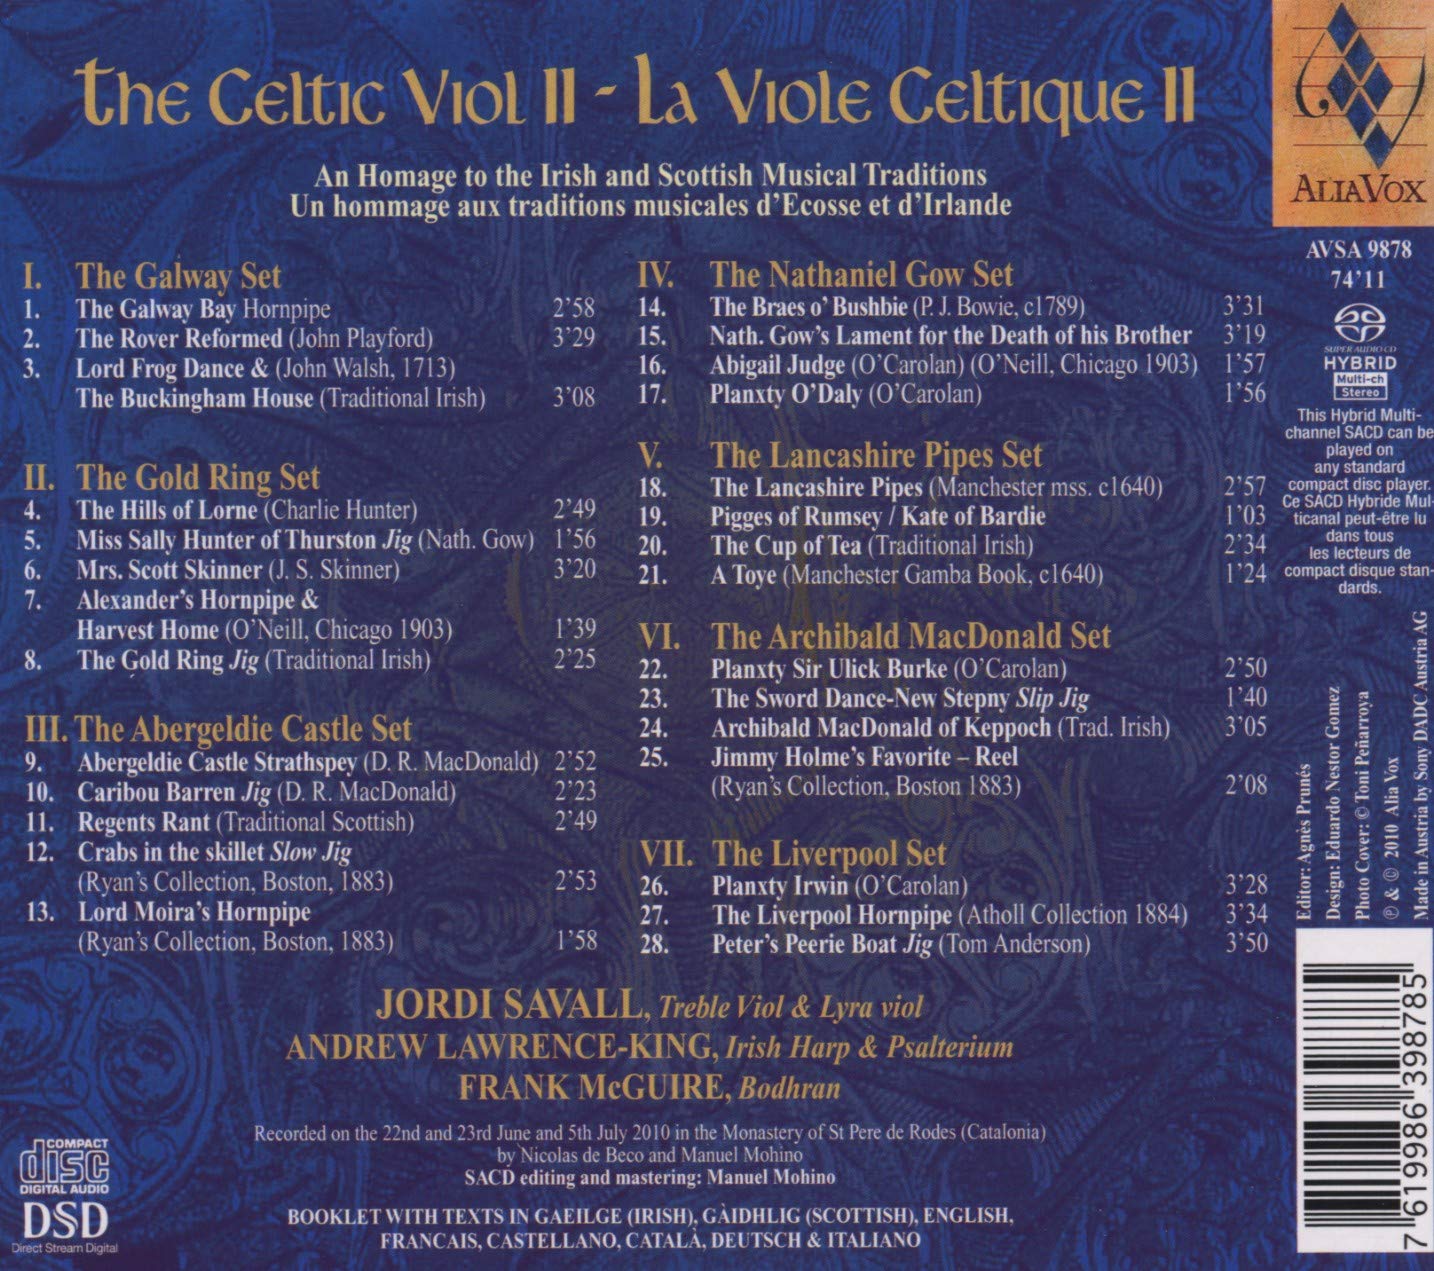 The Celtic Viol Volume II - treble Viol and lyra Viol - Airs and Dances by O’Carolan, etc., Traditional Irish & Scottish (SACD) - slide-1